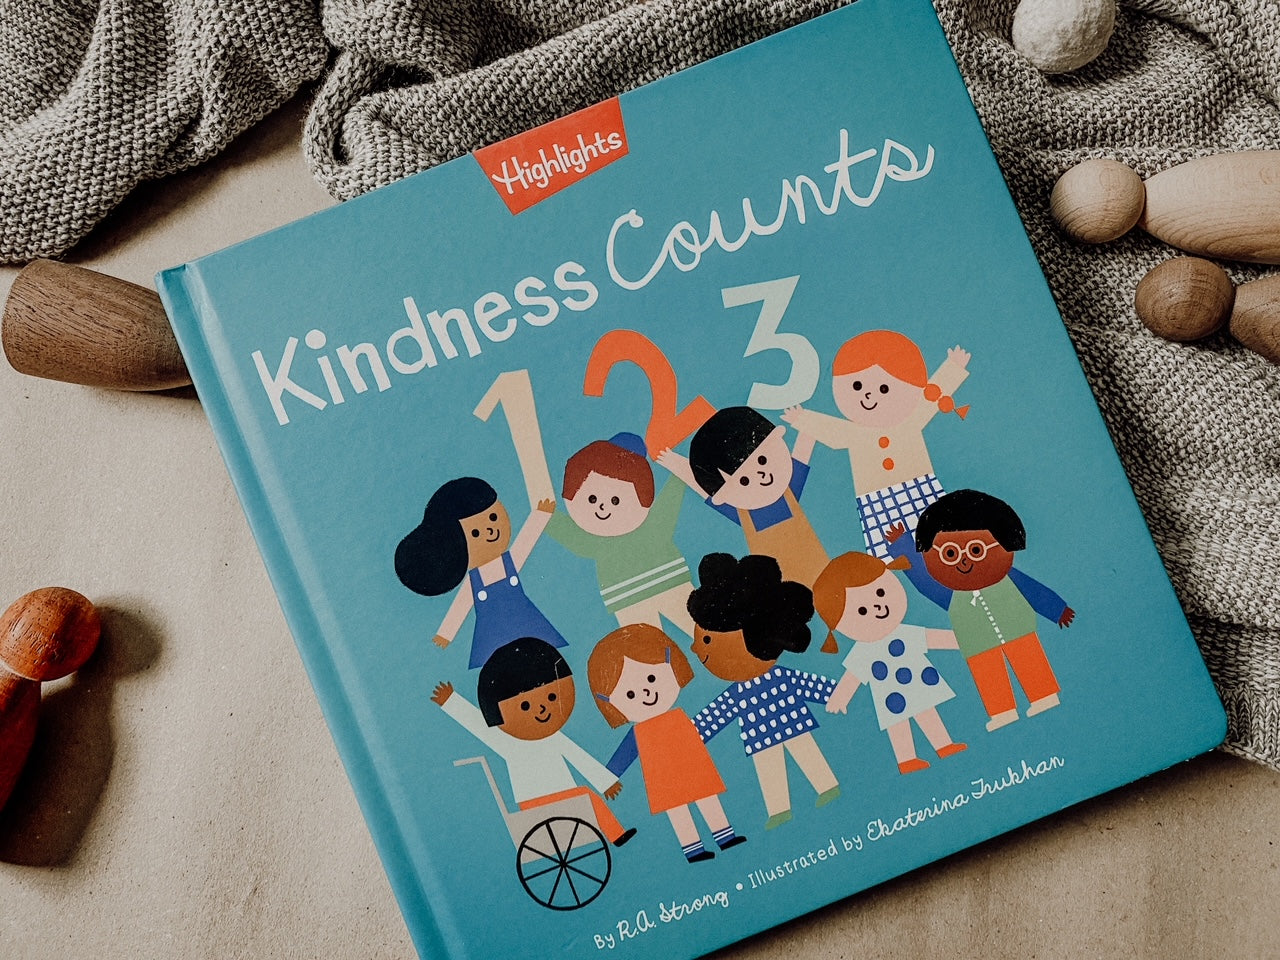 Kindness Counts 123 - The Little Je'EL.Co